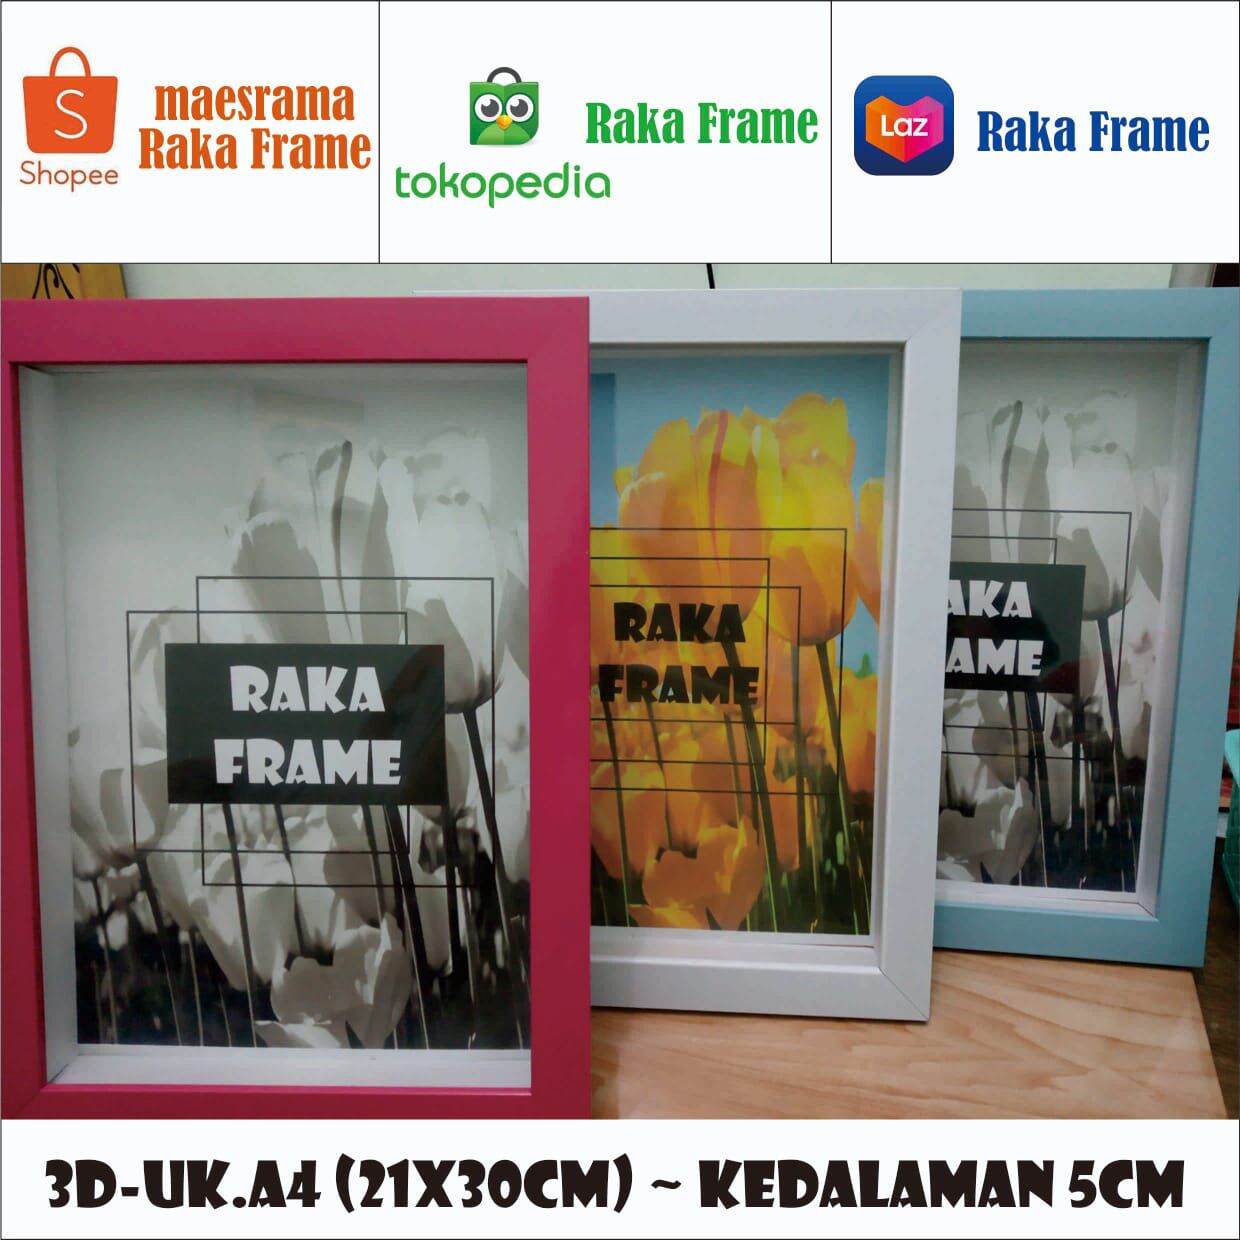 Download Toko Online Raka Frame Official Lazada Co Id